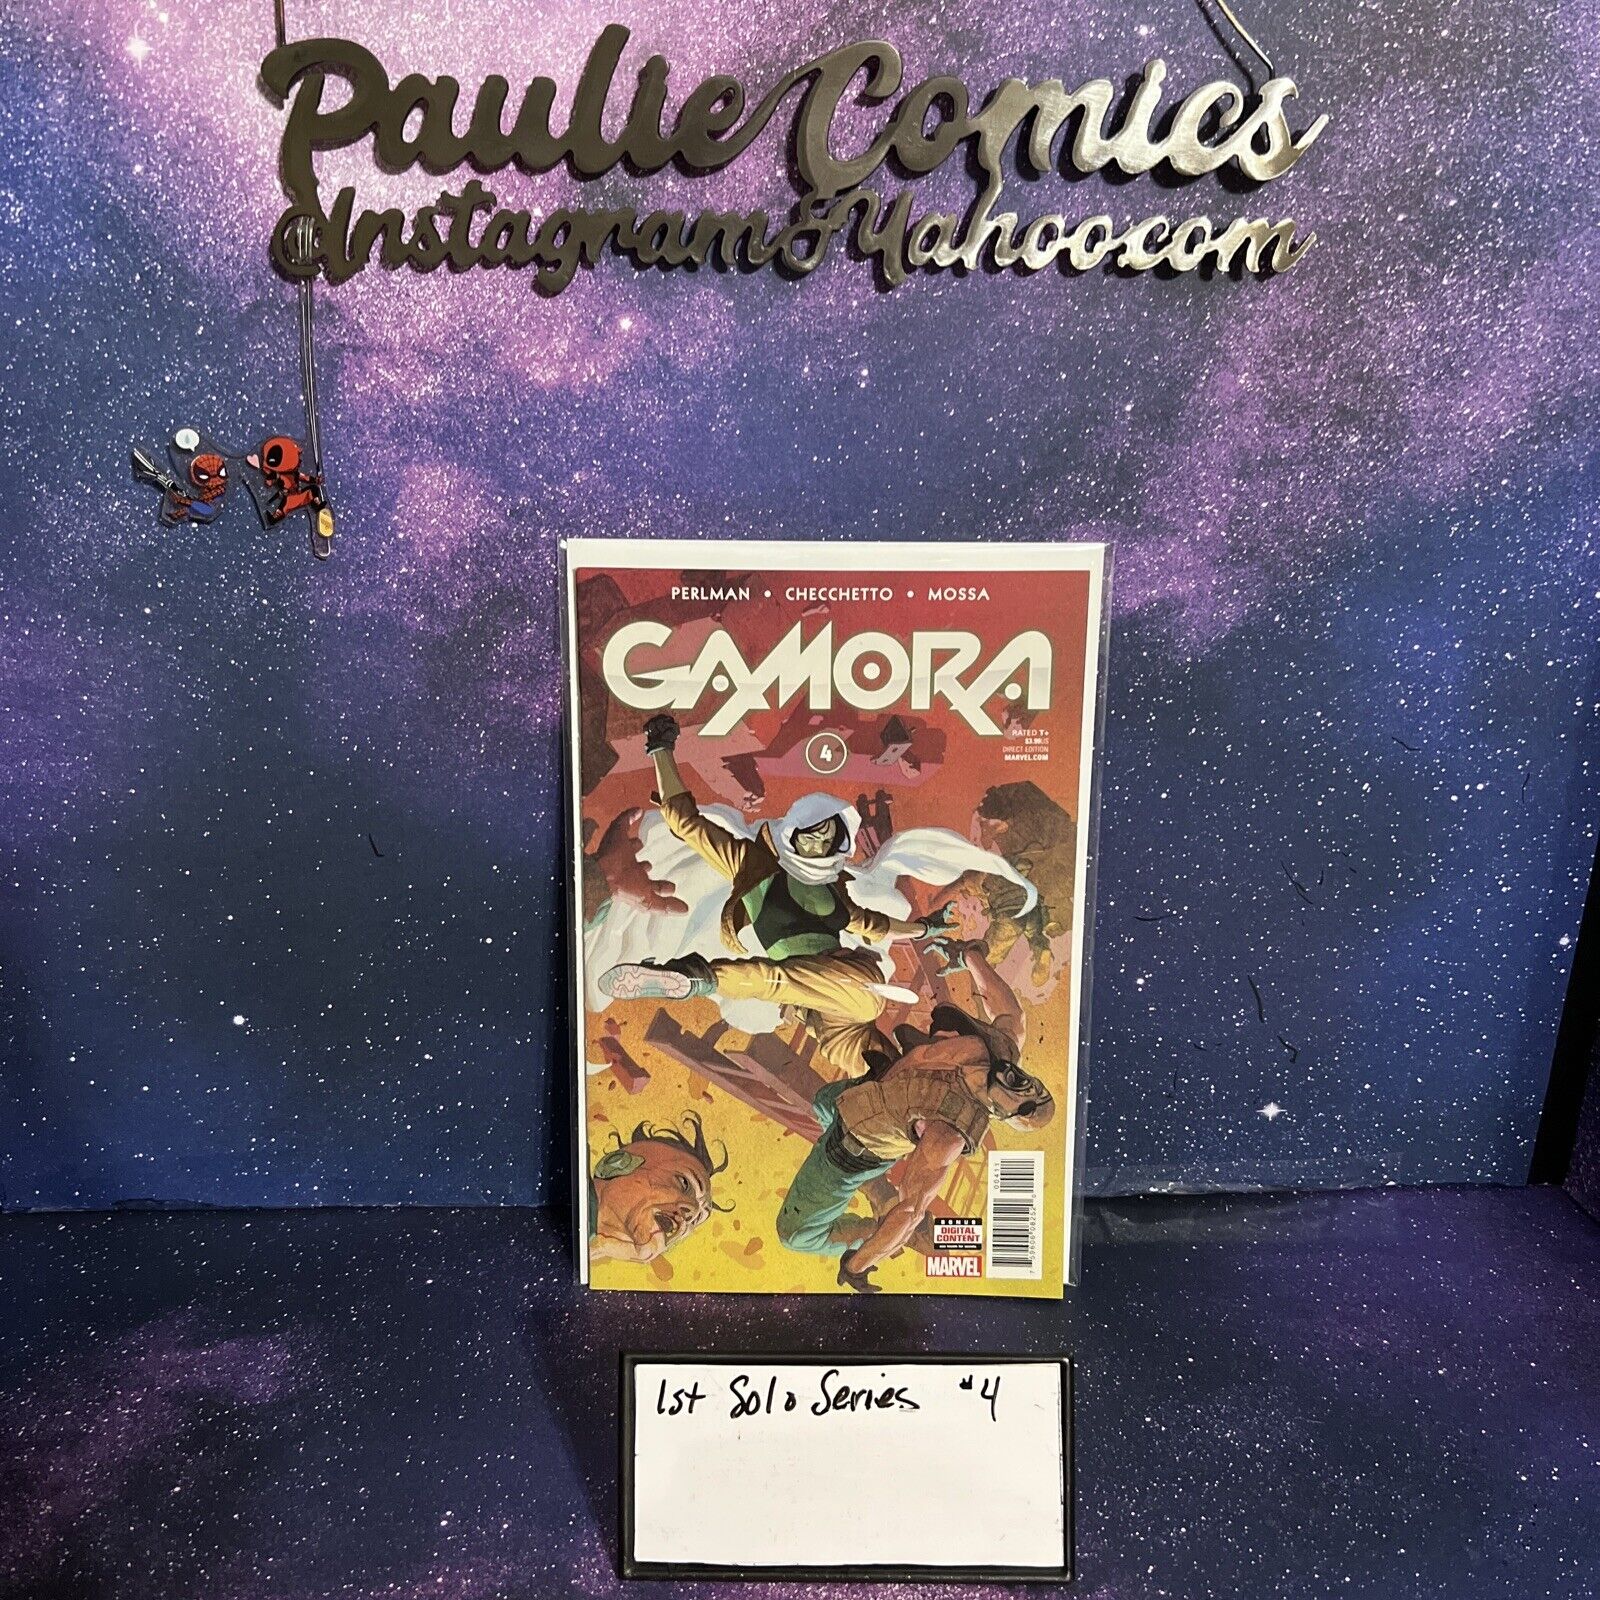 Gamora #4 1st Solo series Marvel Comics HTF Hot Series book